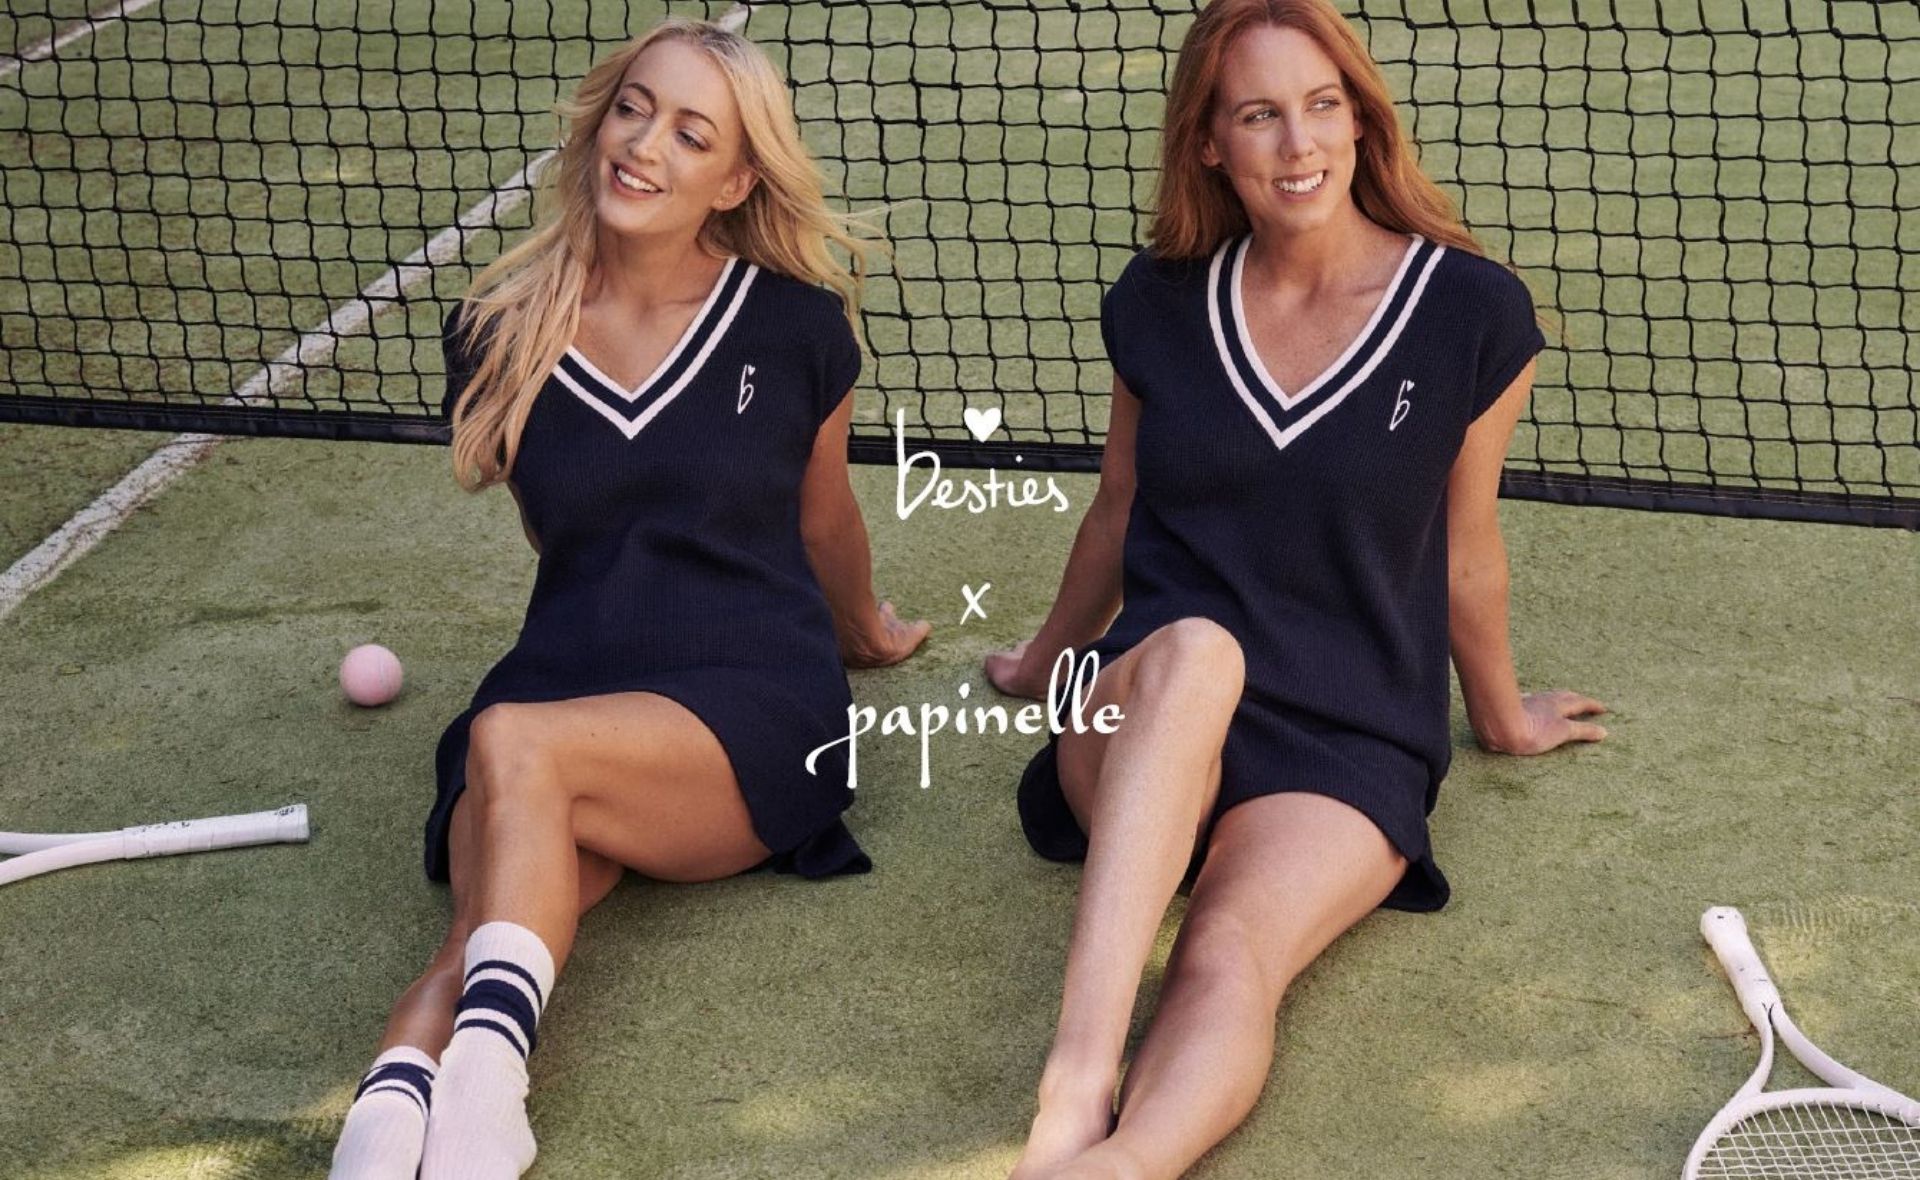 Jackie O`Loungewear Periwinkle V Neck Modal Pajamas Set